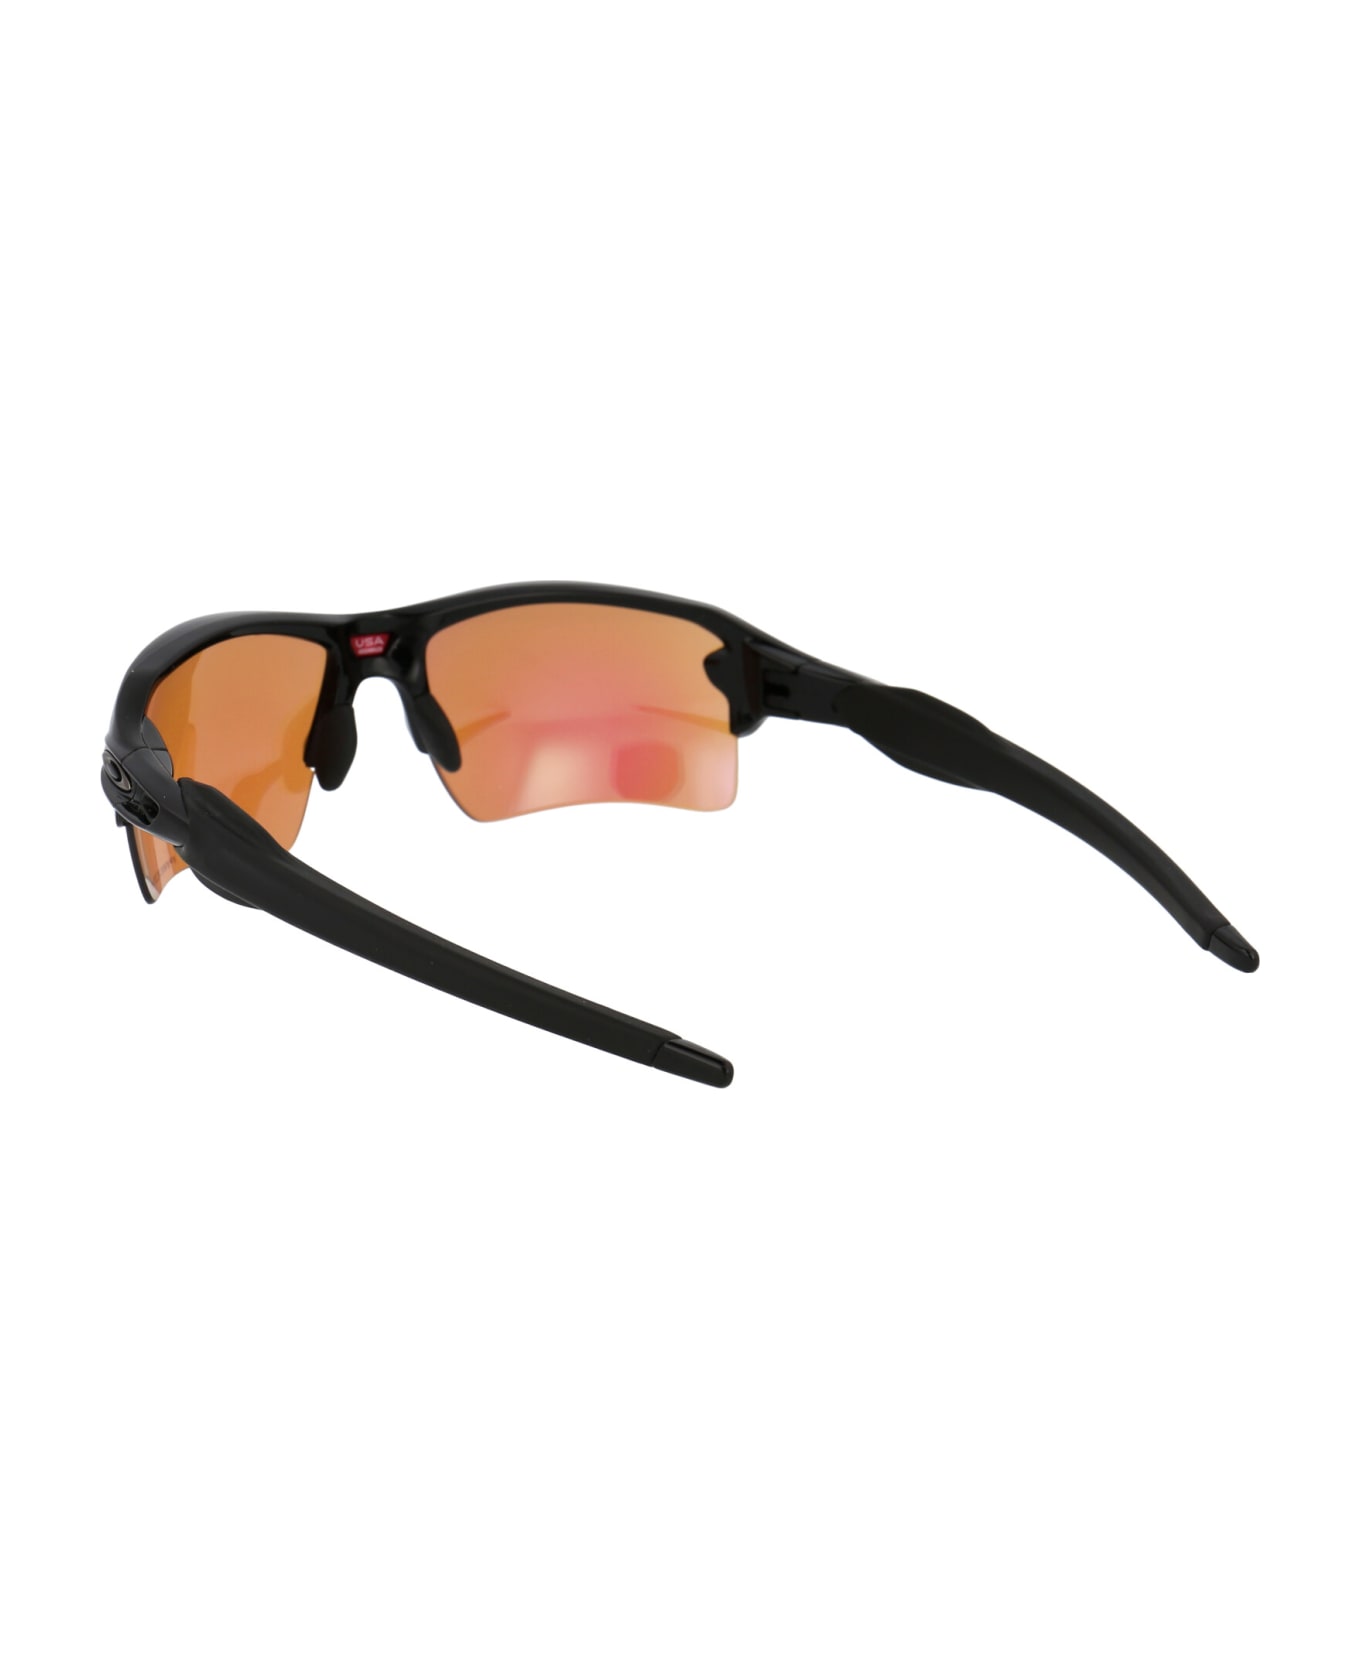 Oakley Flak 2.0 Xl Sunglasses - 918805 POLISHED BLACK